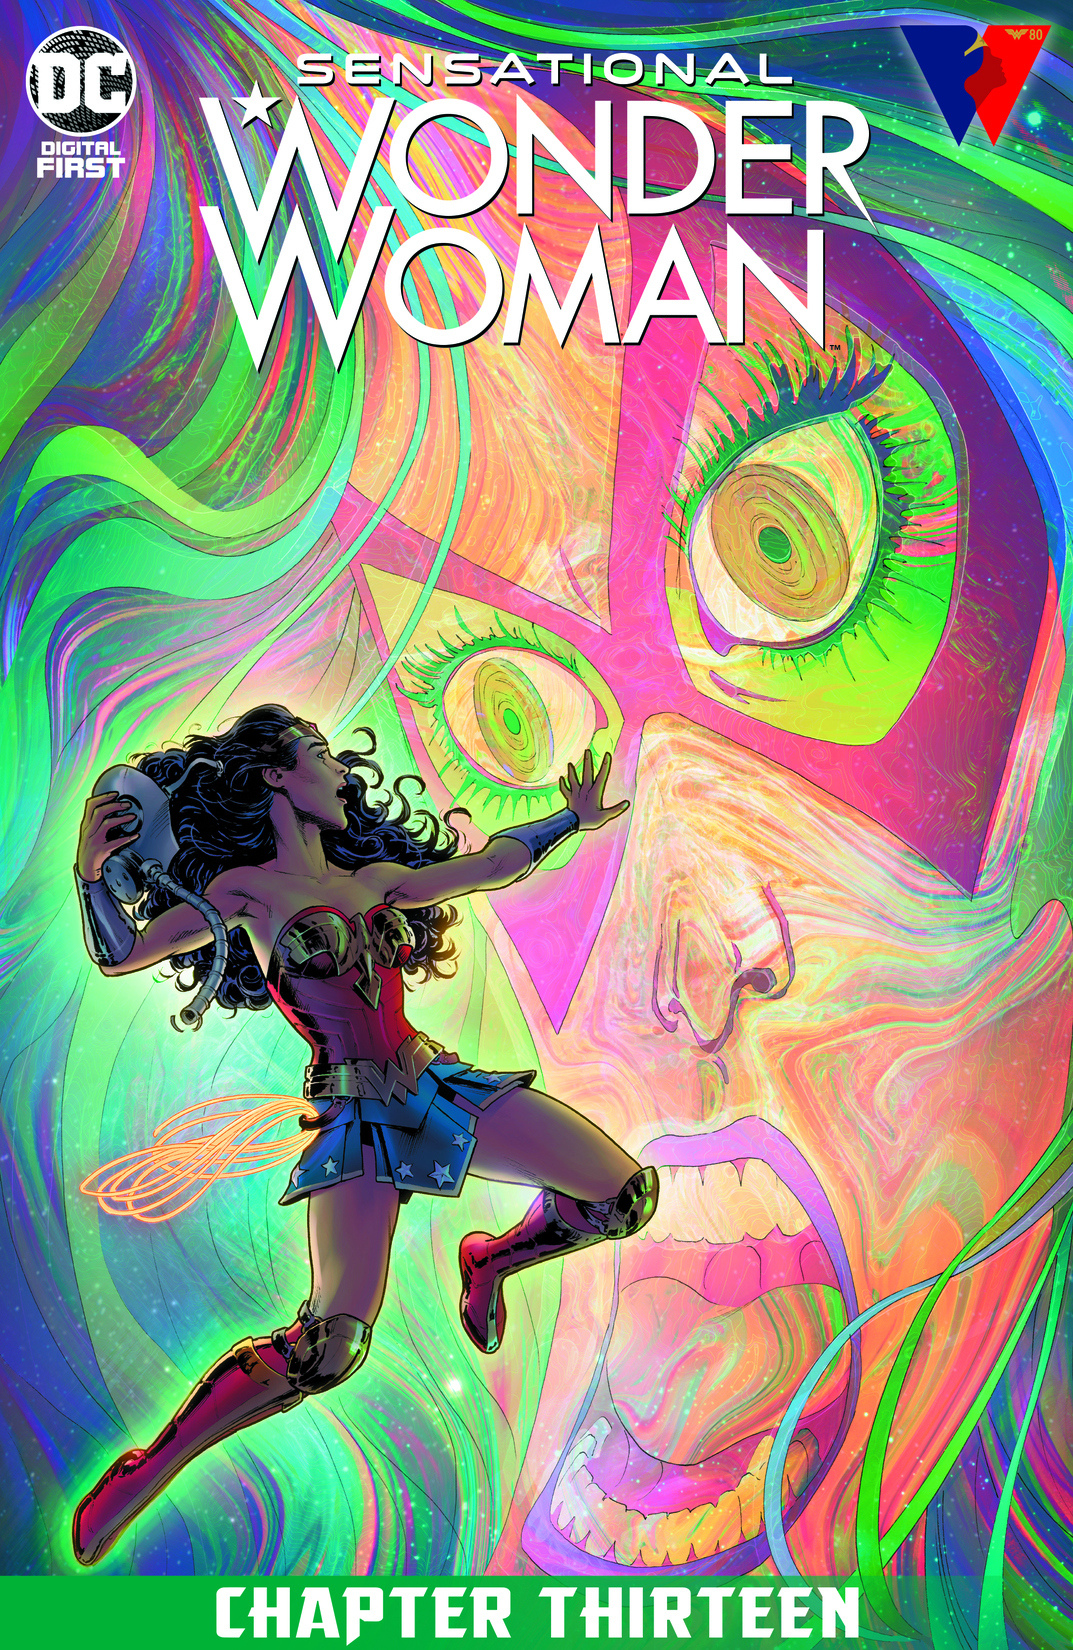 Sensational Wonder Woman #13 preview images